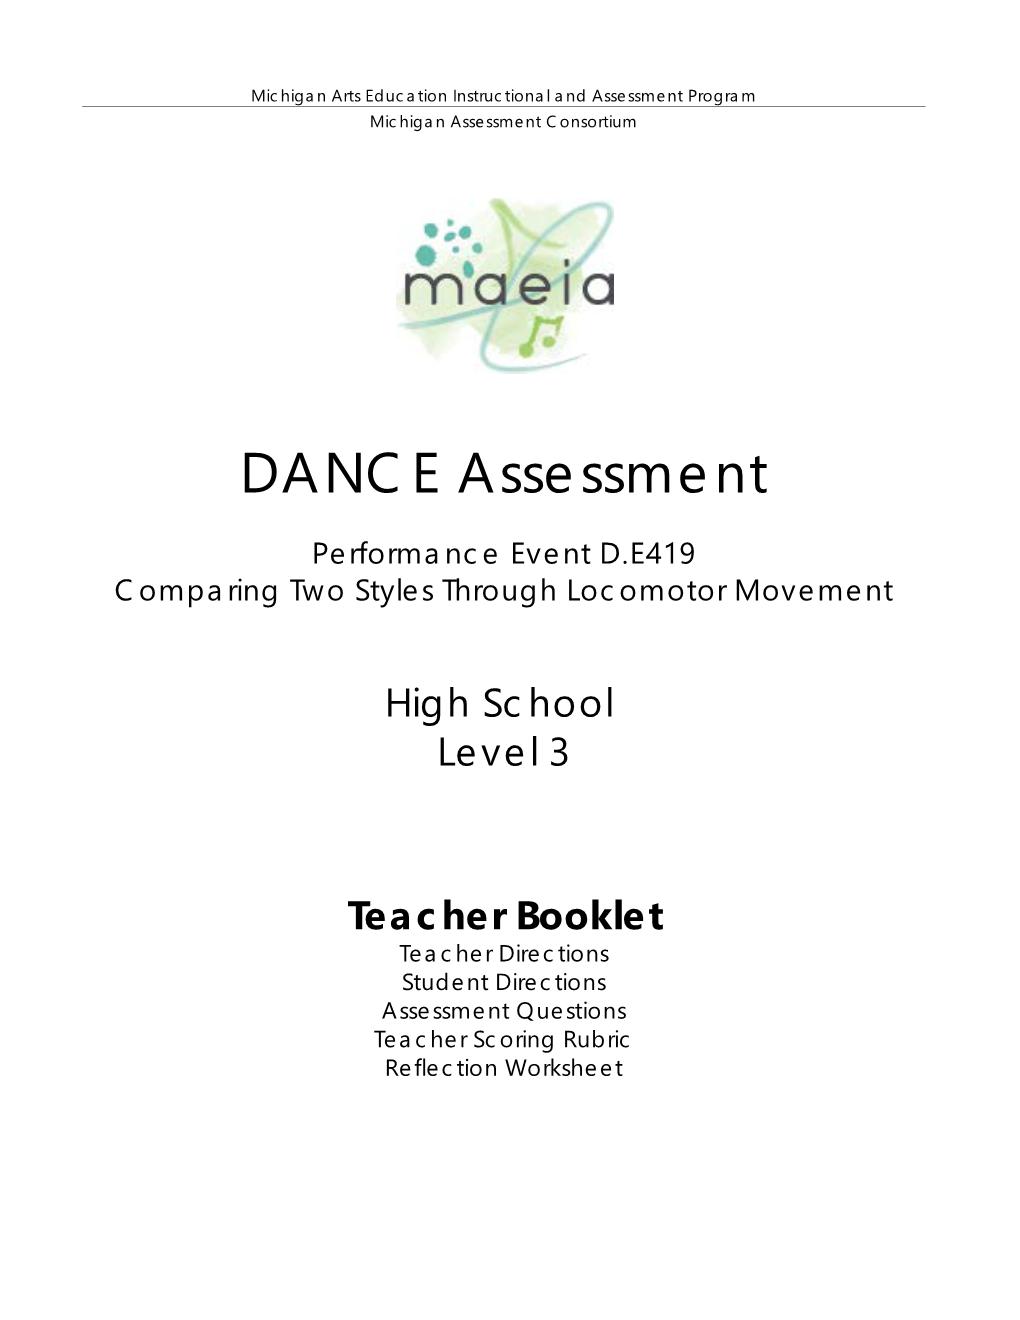 DANCE Assessment